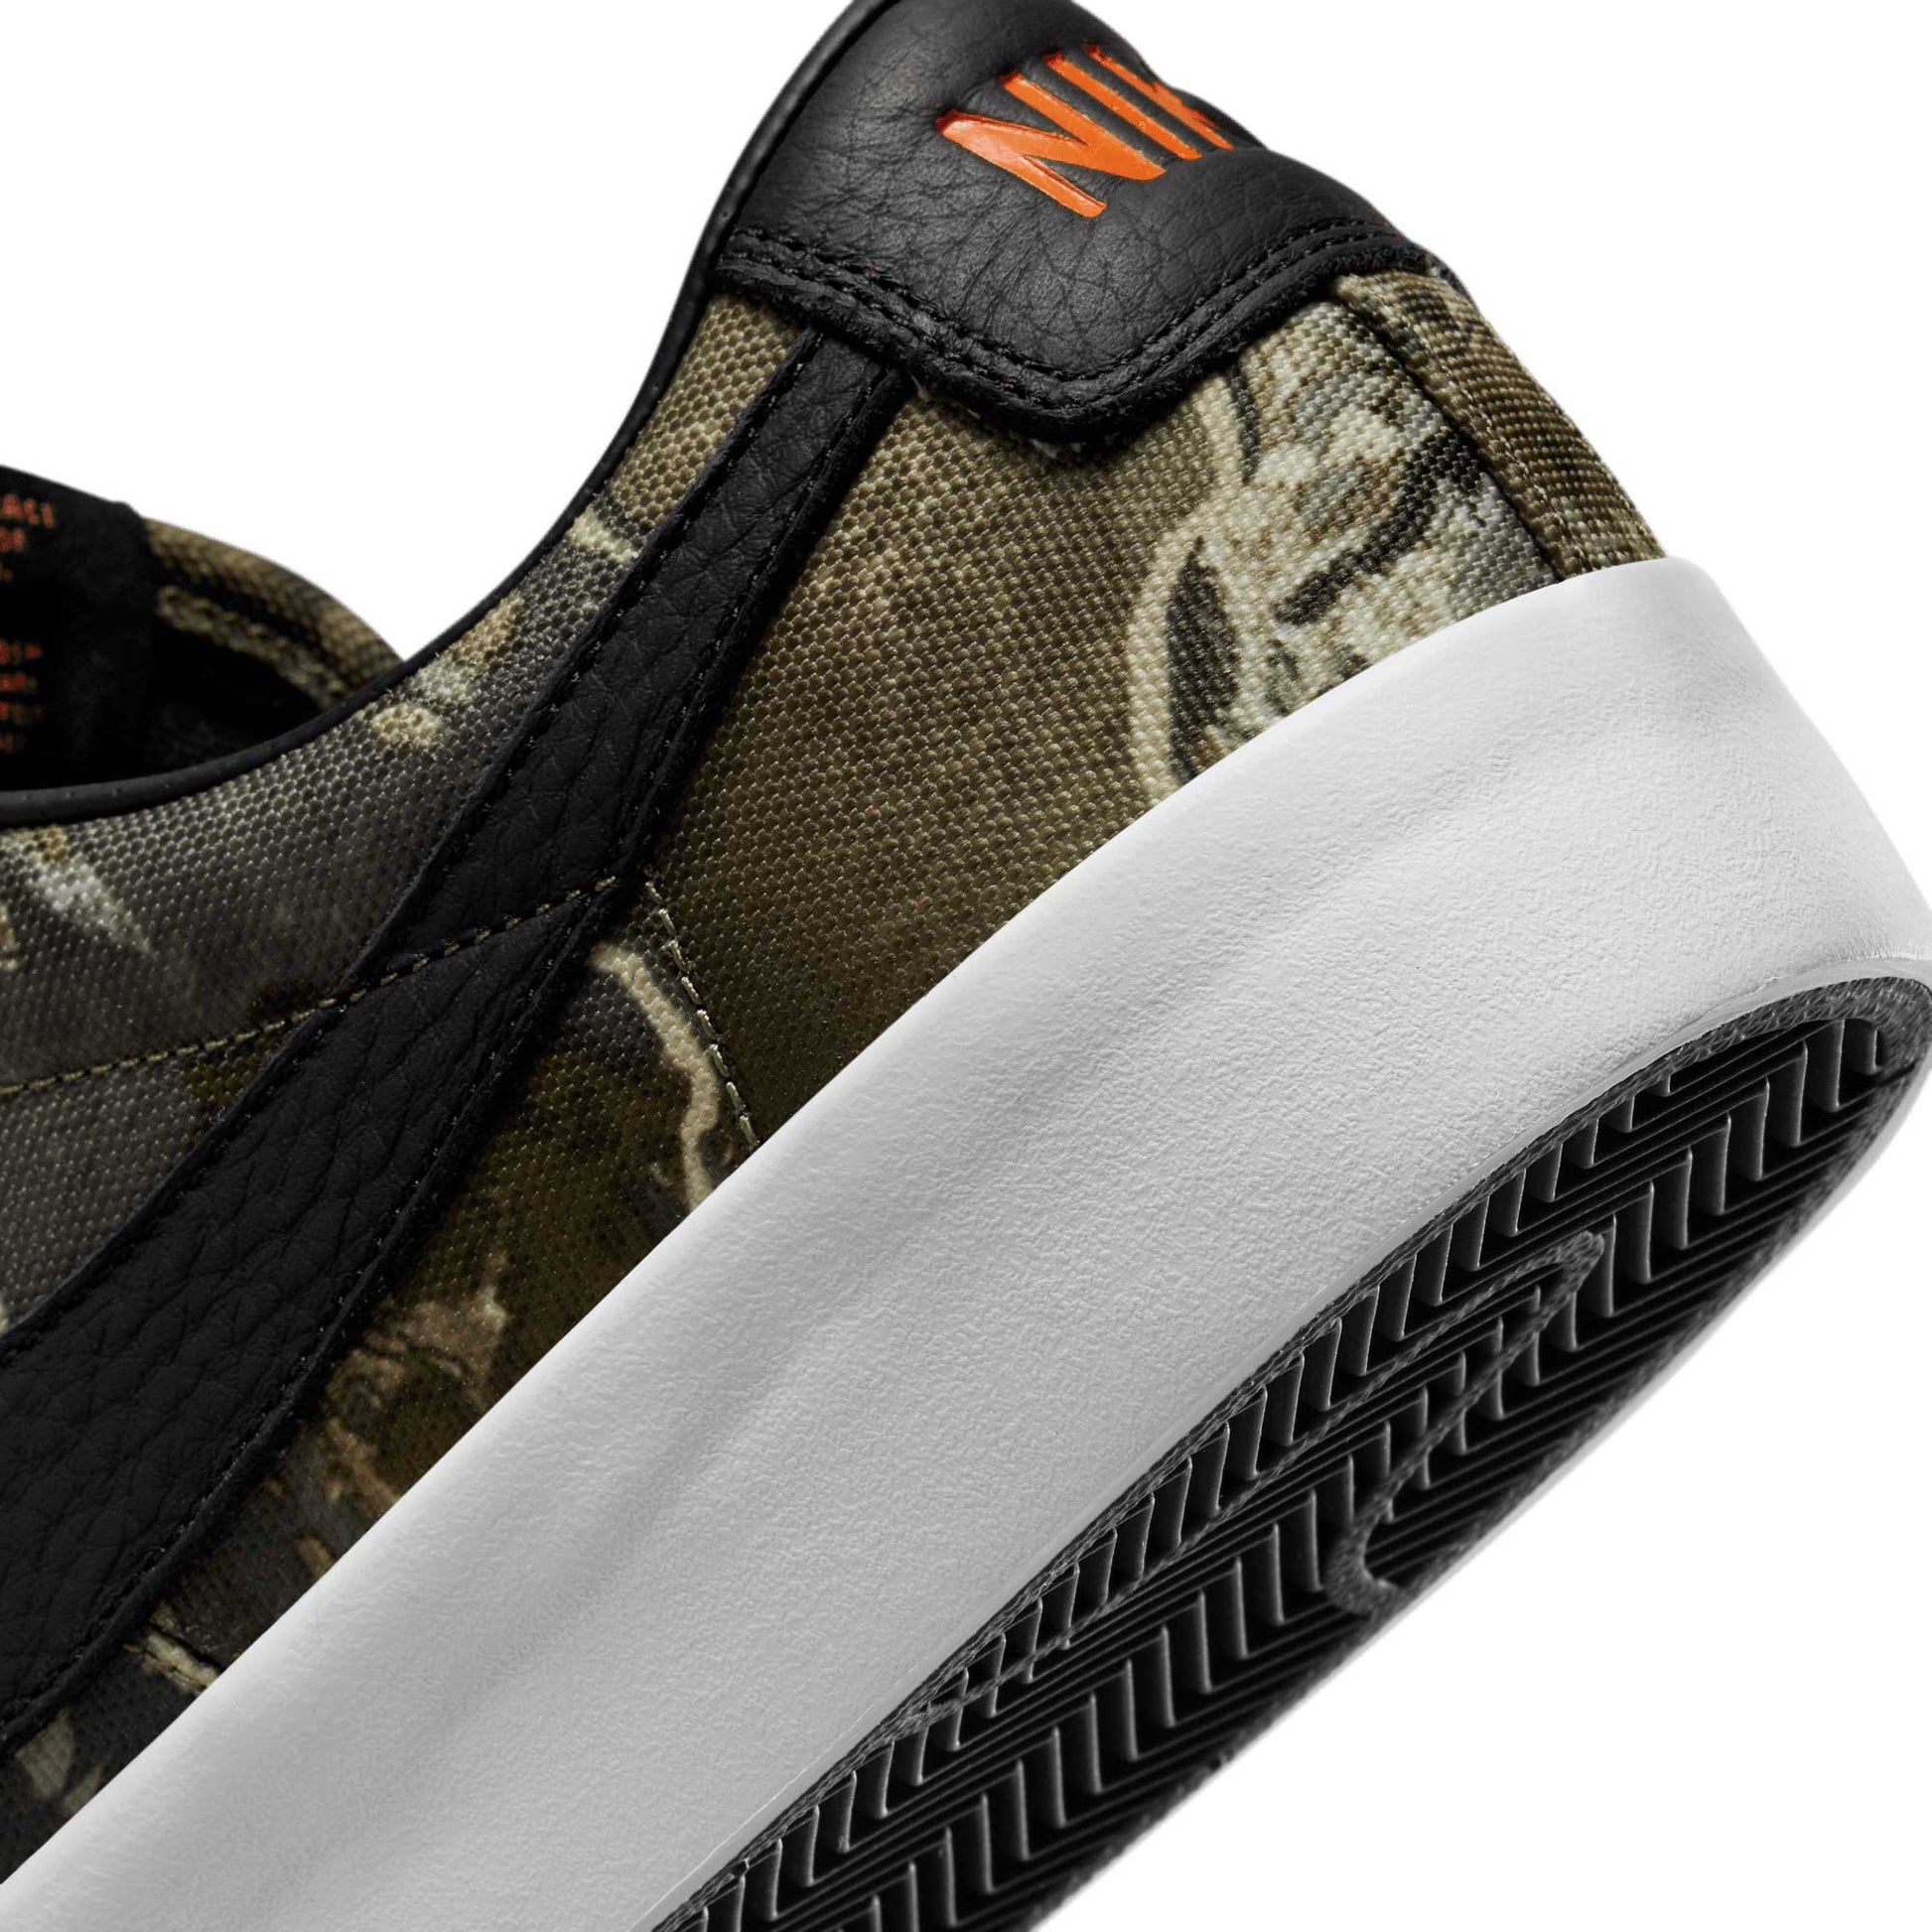 Nike SB Blazer Low Pro GT Premium, black/safety orange-black-photon dust - Tiki Room Skateboards - 11